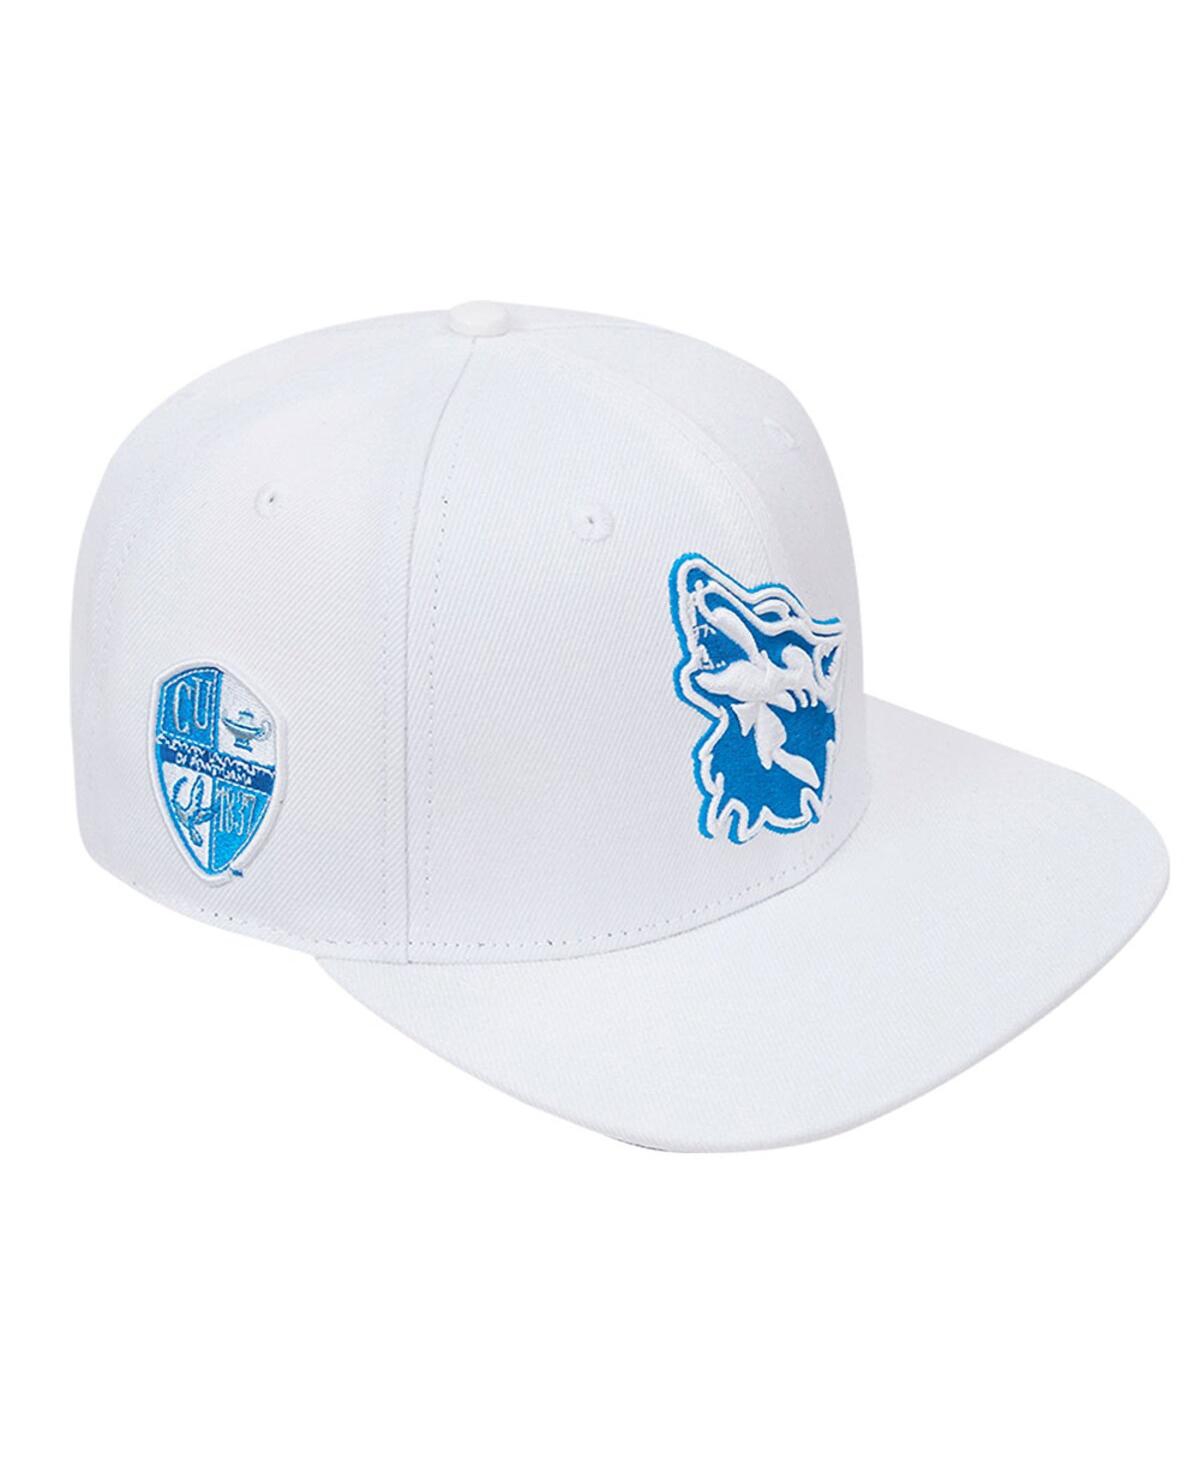 Shop Pro Standard Men's  White Cheyney Wolves Mascot Evergreen Wool Snapback Hat